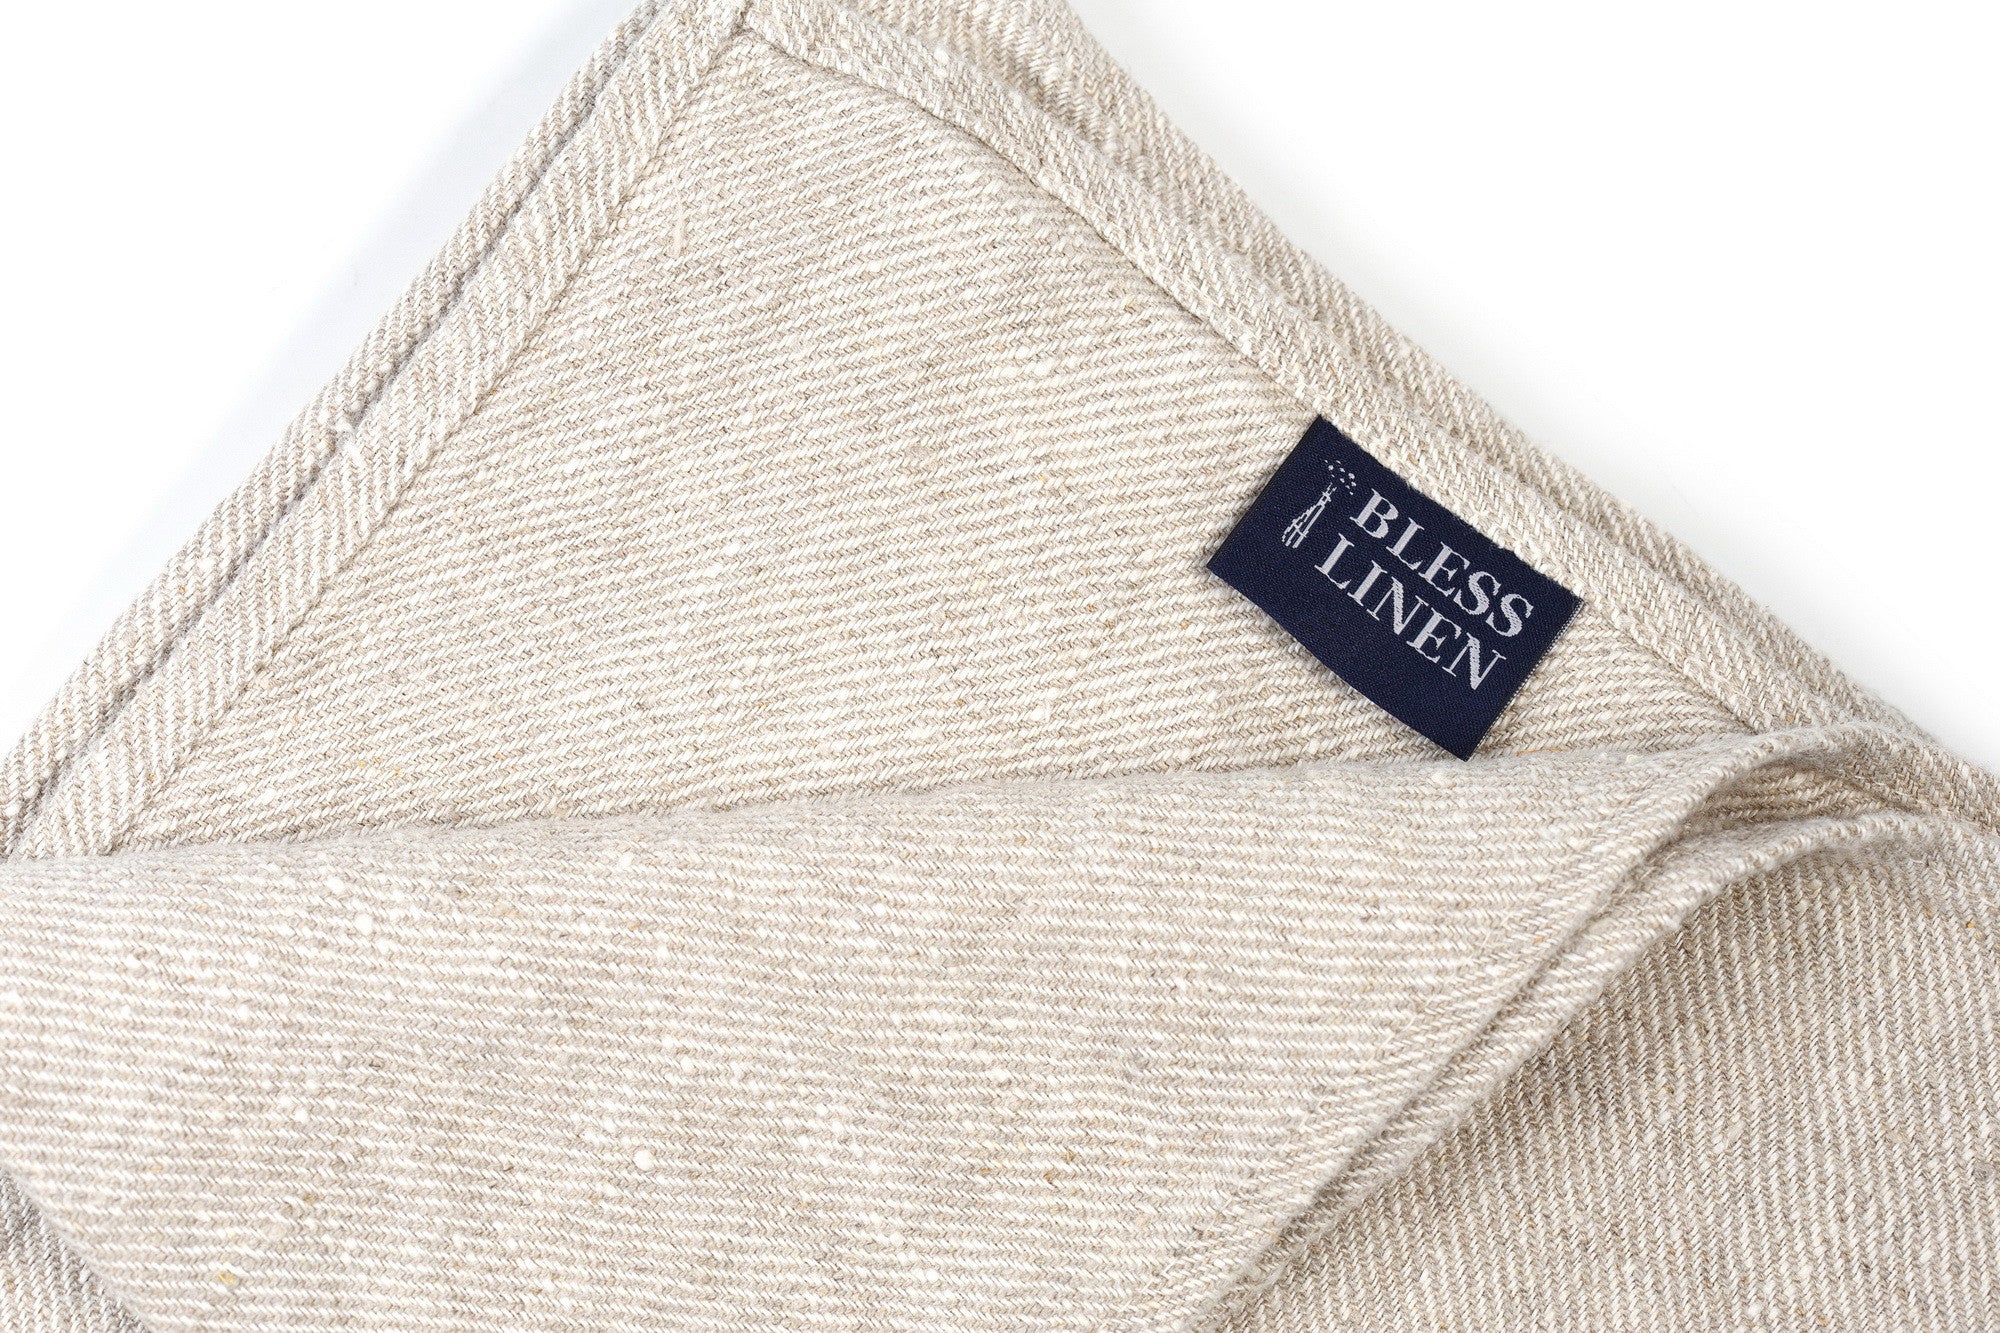 BLESS LINEN Natural Huckaback 100% Linen Bath Towel, 30 x 58 Inches - BLESS LINEN pure linen towels and blankets - 2